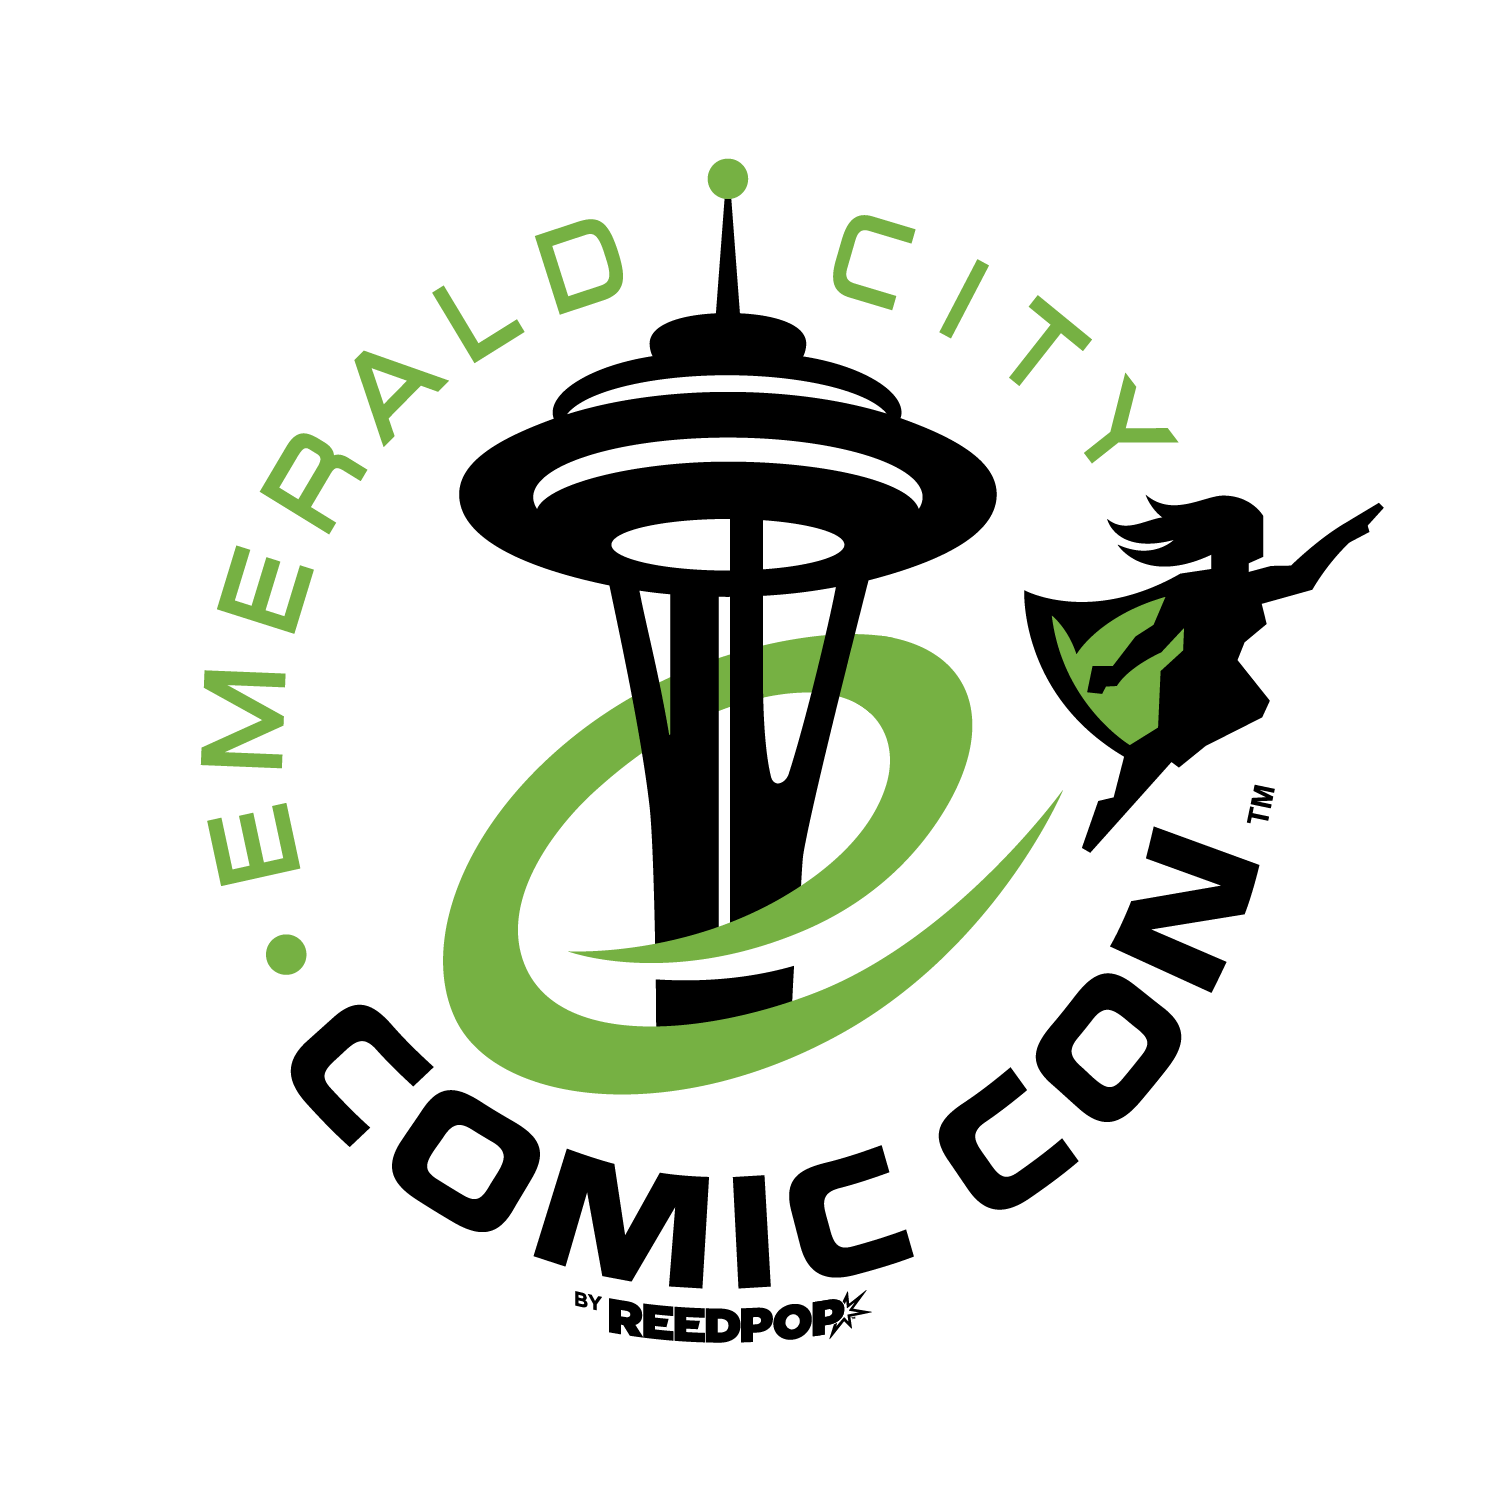 Emerald-city-comic-con-logo.png